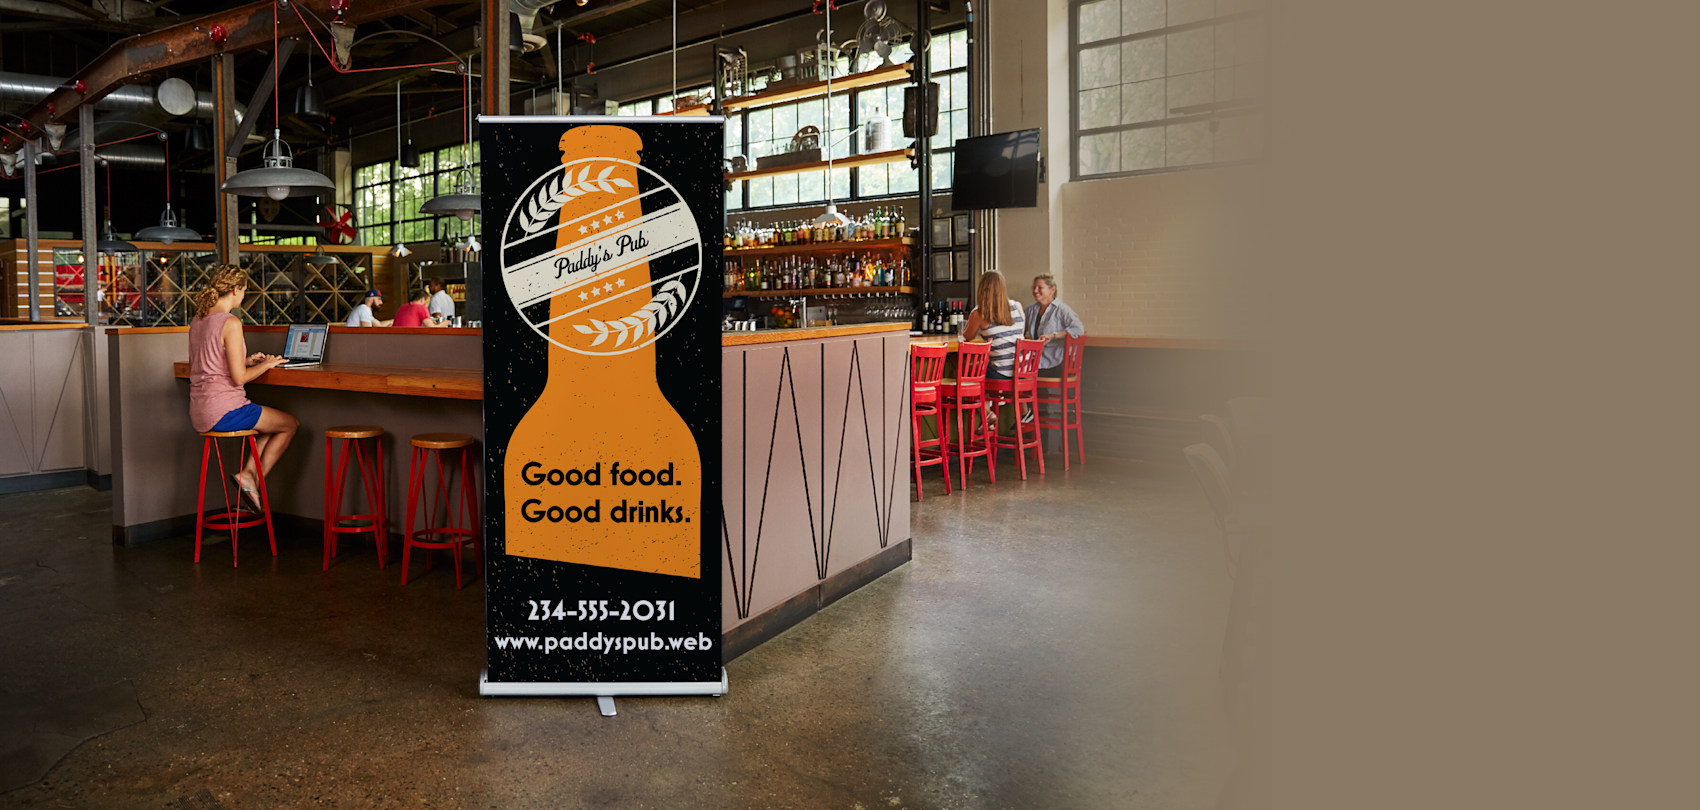 Larger version: Retractable banner for restaurant